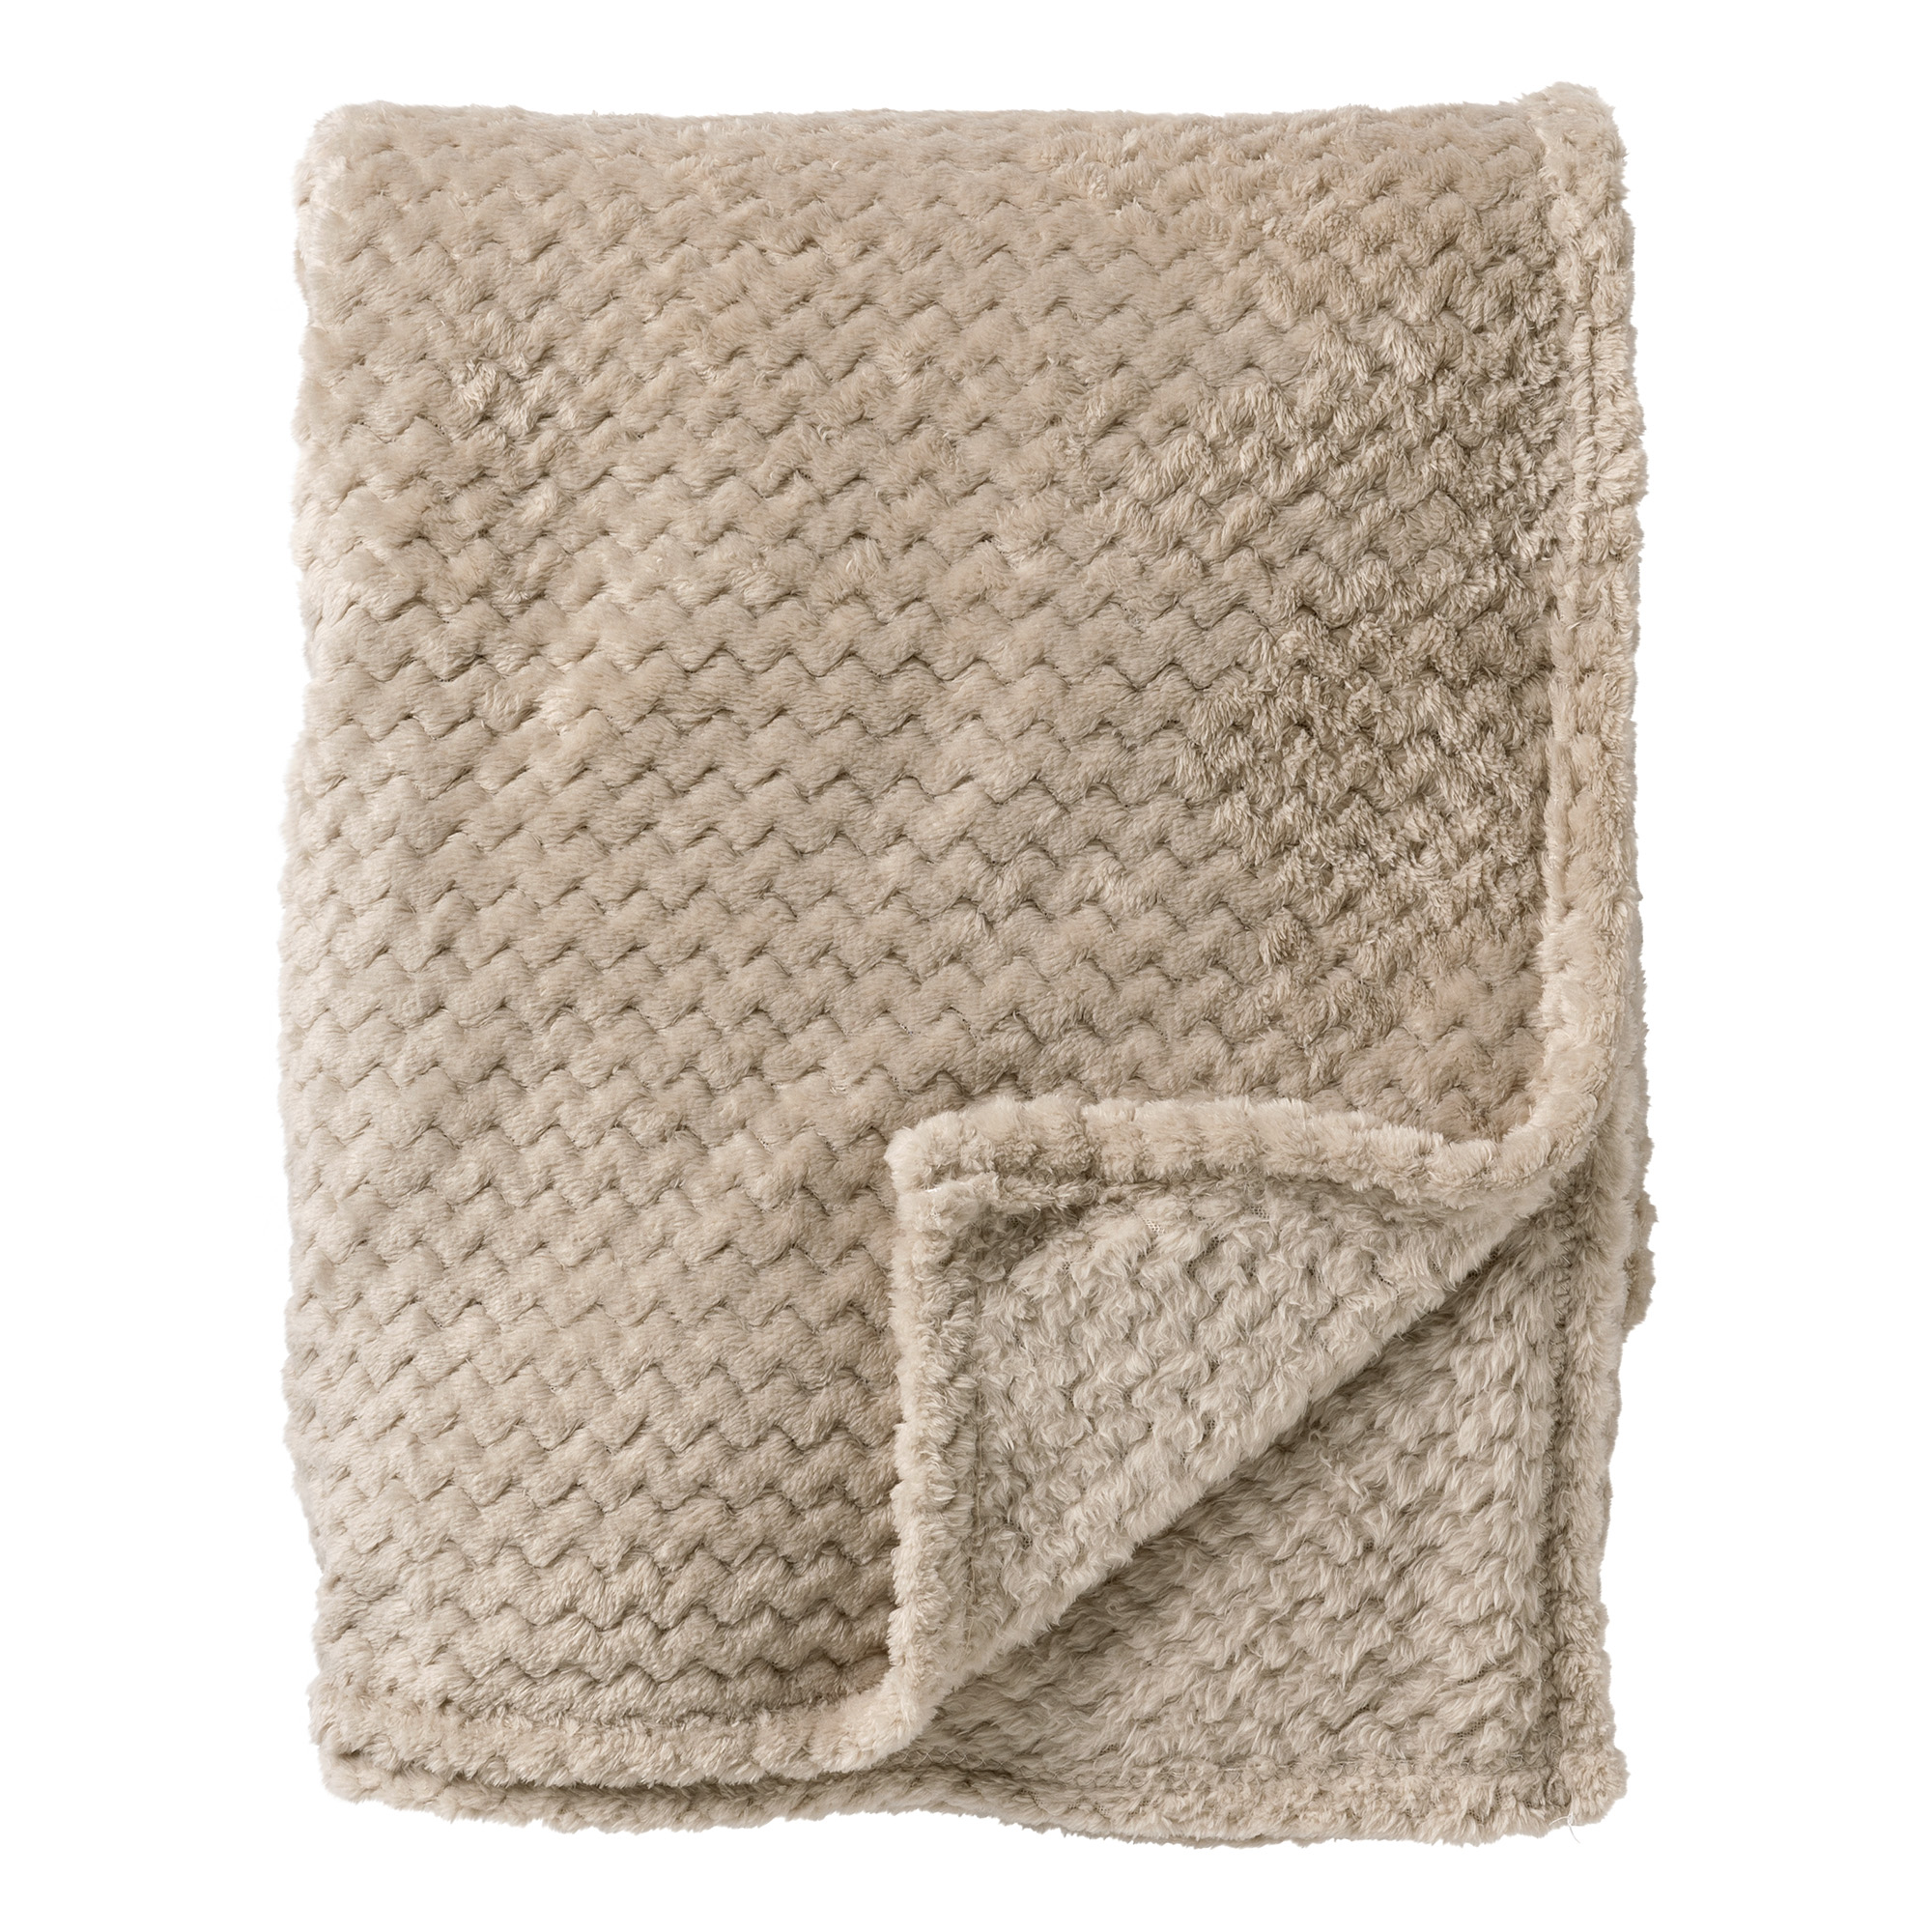 MARA - Plaid 150x200 cm - superzachte deken met zigzagpatroon - Pumice Stone - beige